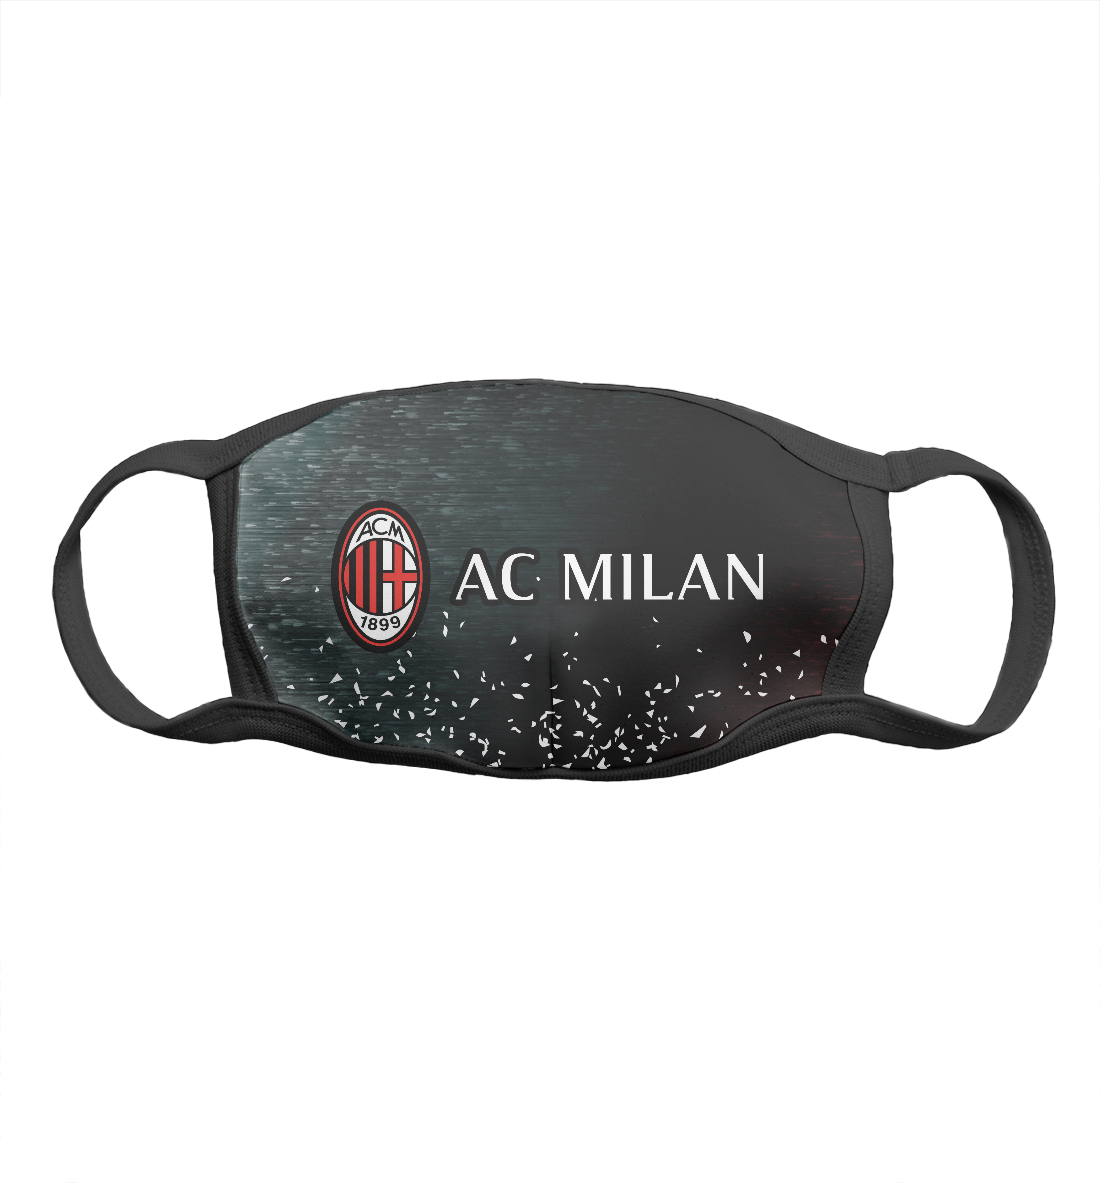 Женская Маска AC Milan / Милан, артикул ACM-873489-msk-1mp